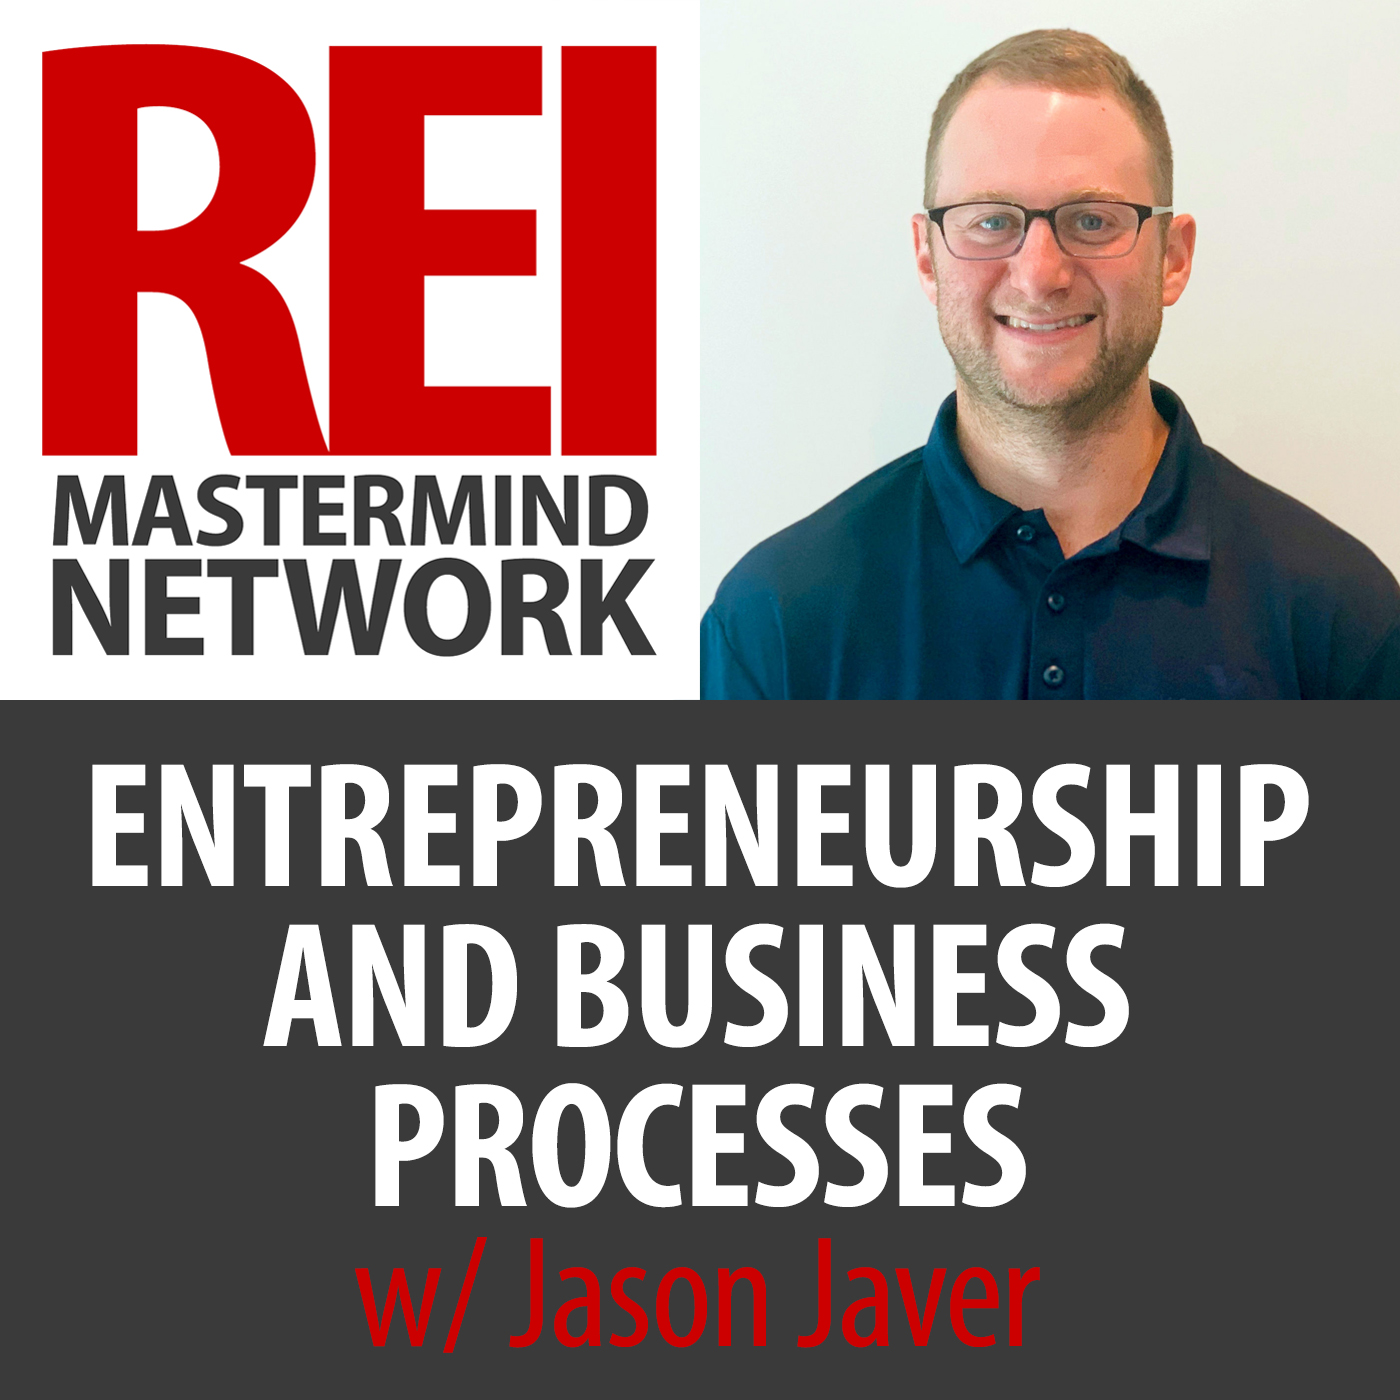 Entrepreneurship and Business Processes with Jason Javer #212 Image